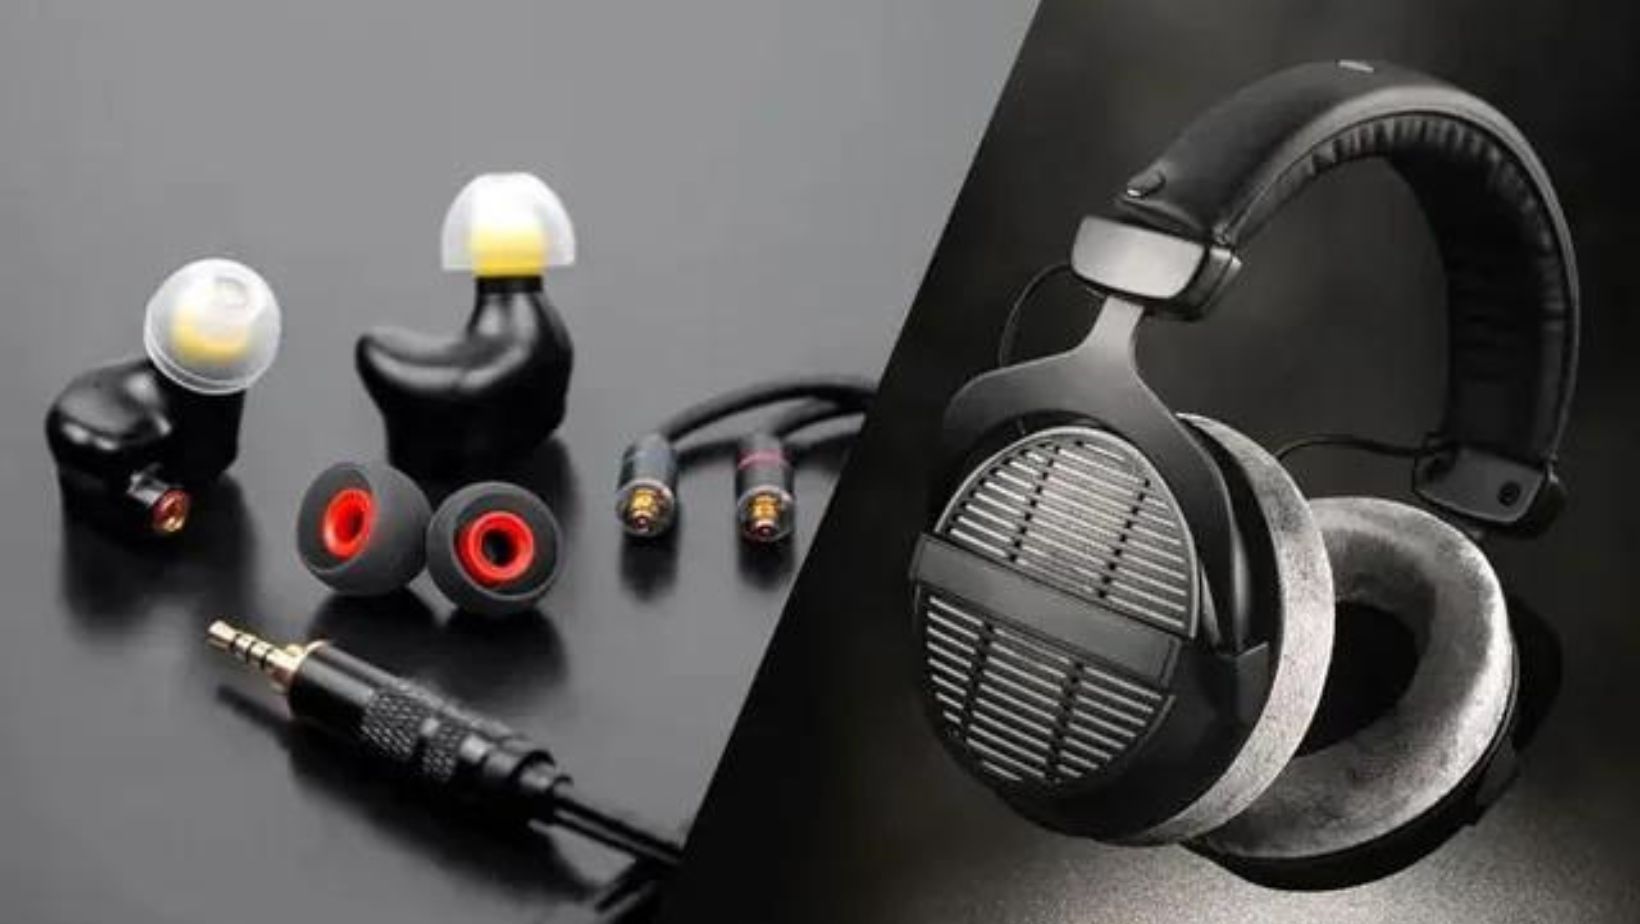 IEM Headphones for Gaming